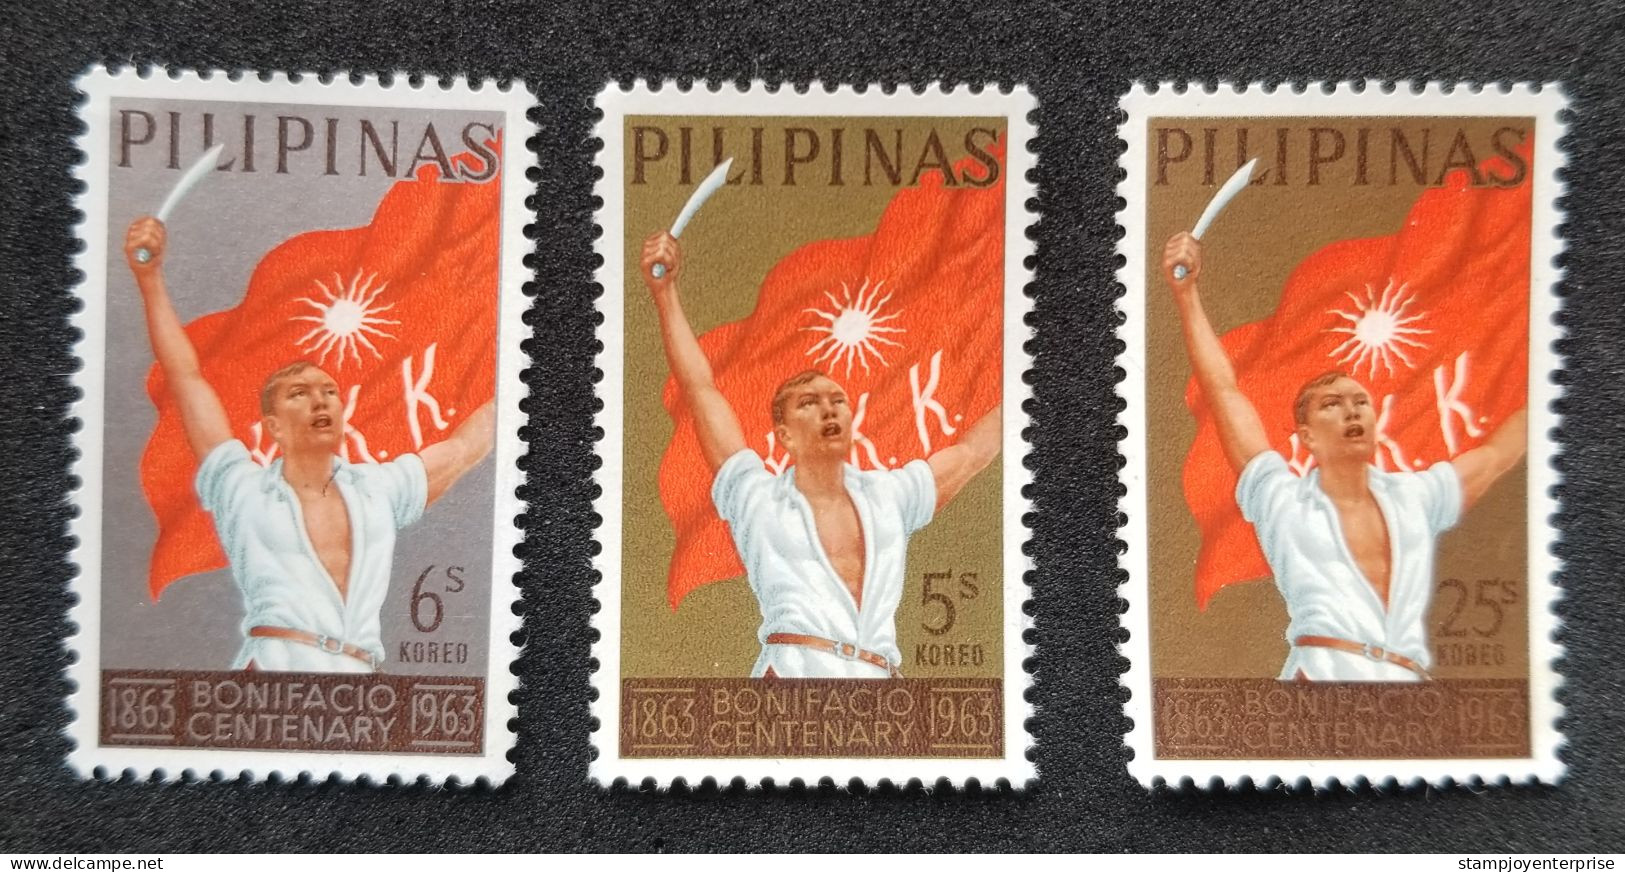 Philippines Centenary The Birth Of Andres Bonifacio 1963 (stamp) MNH - Philippines